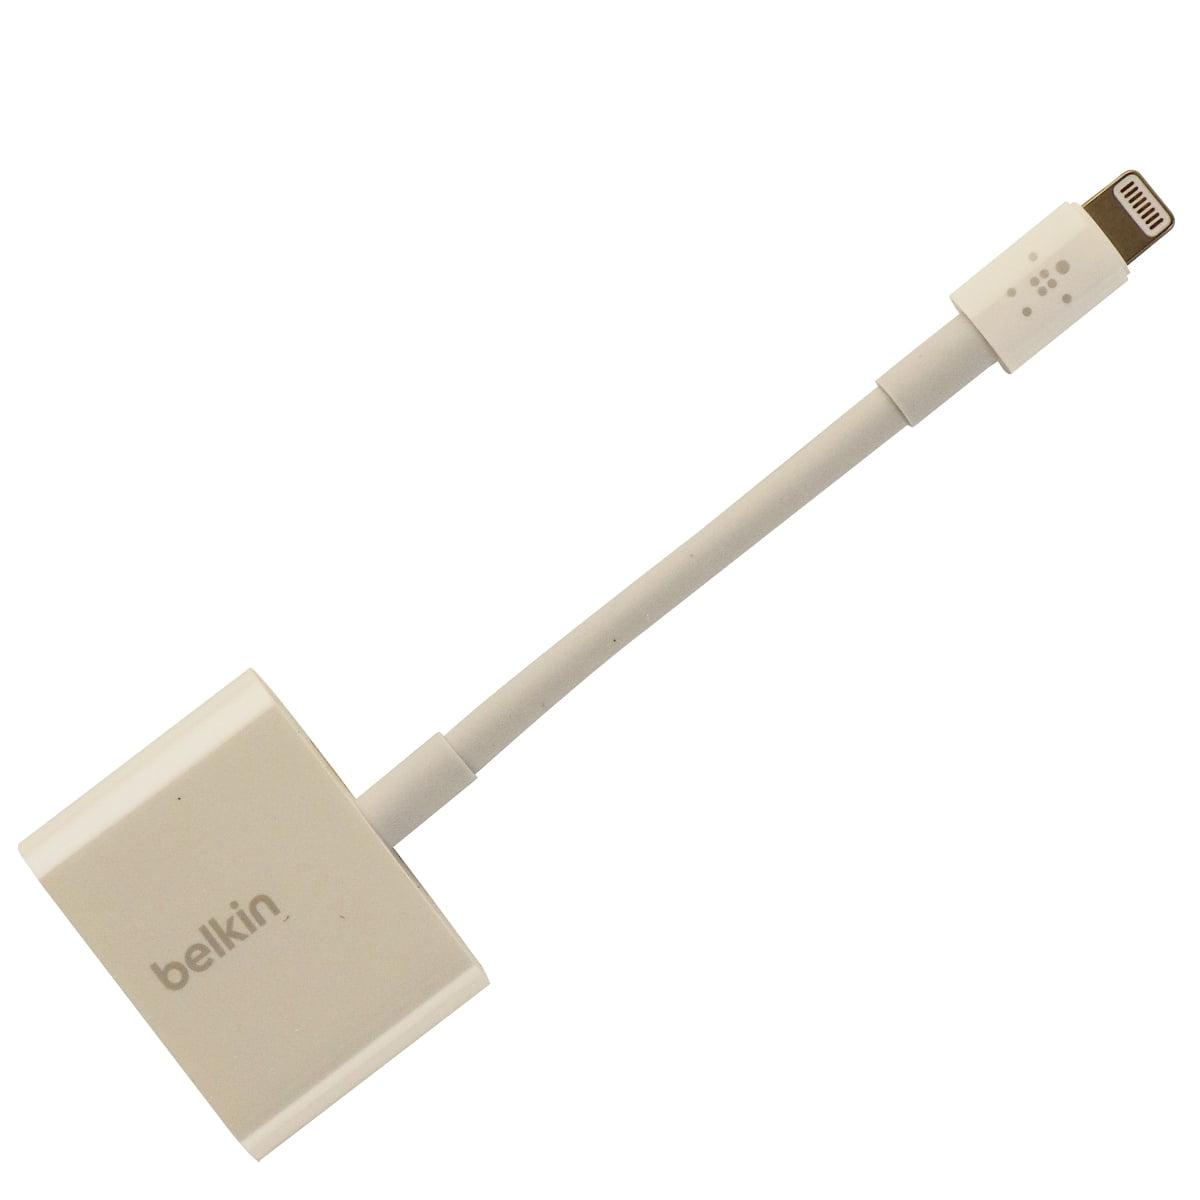 Belkin Lightning Audio And Charge Rockstar Adapter For Apple Products White Refurbished Walmart Com Walmart Com